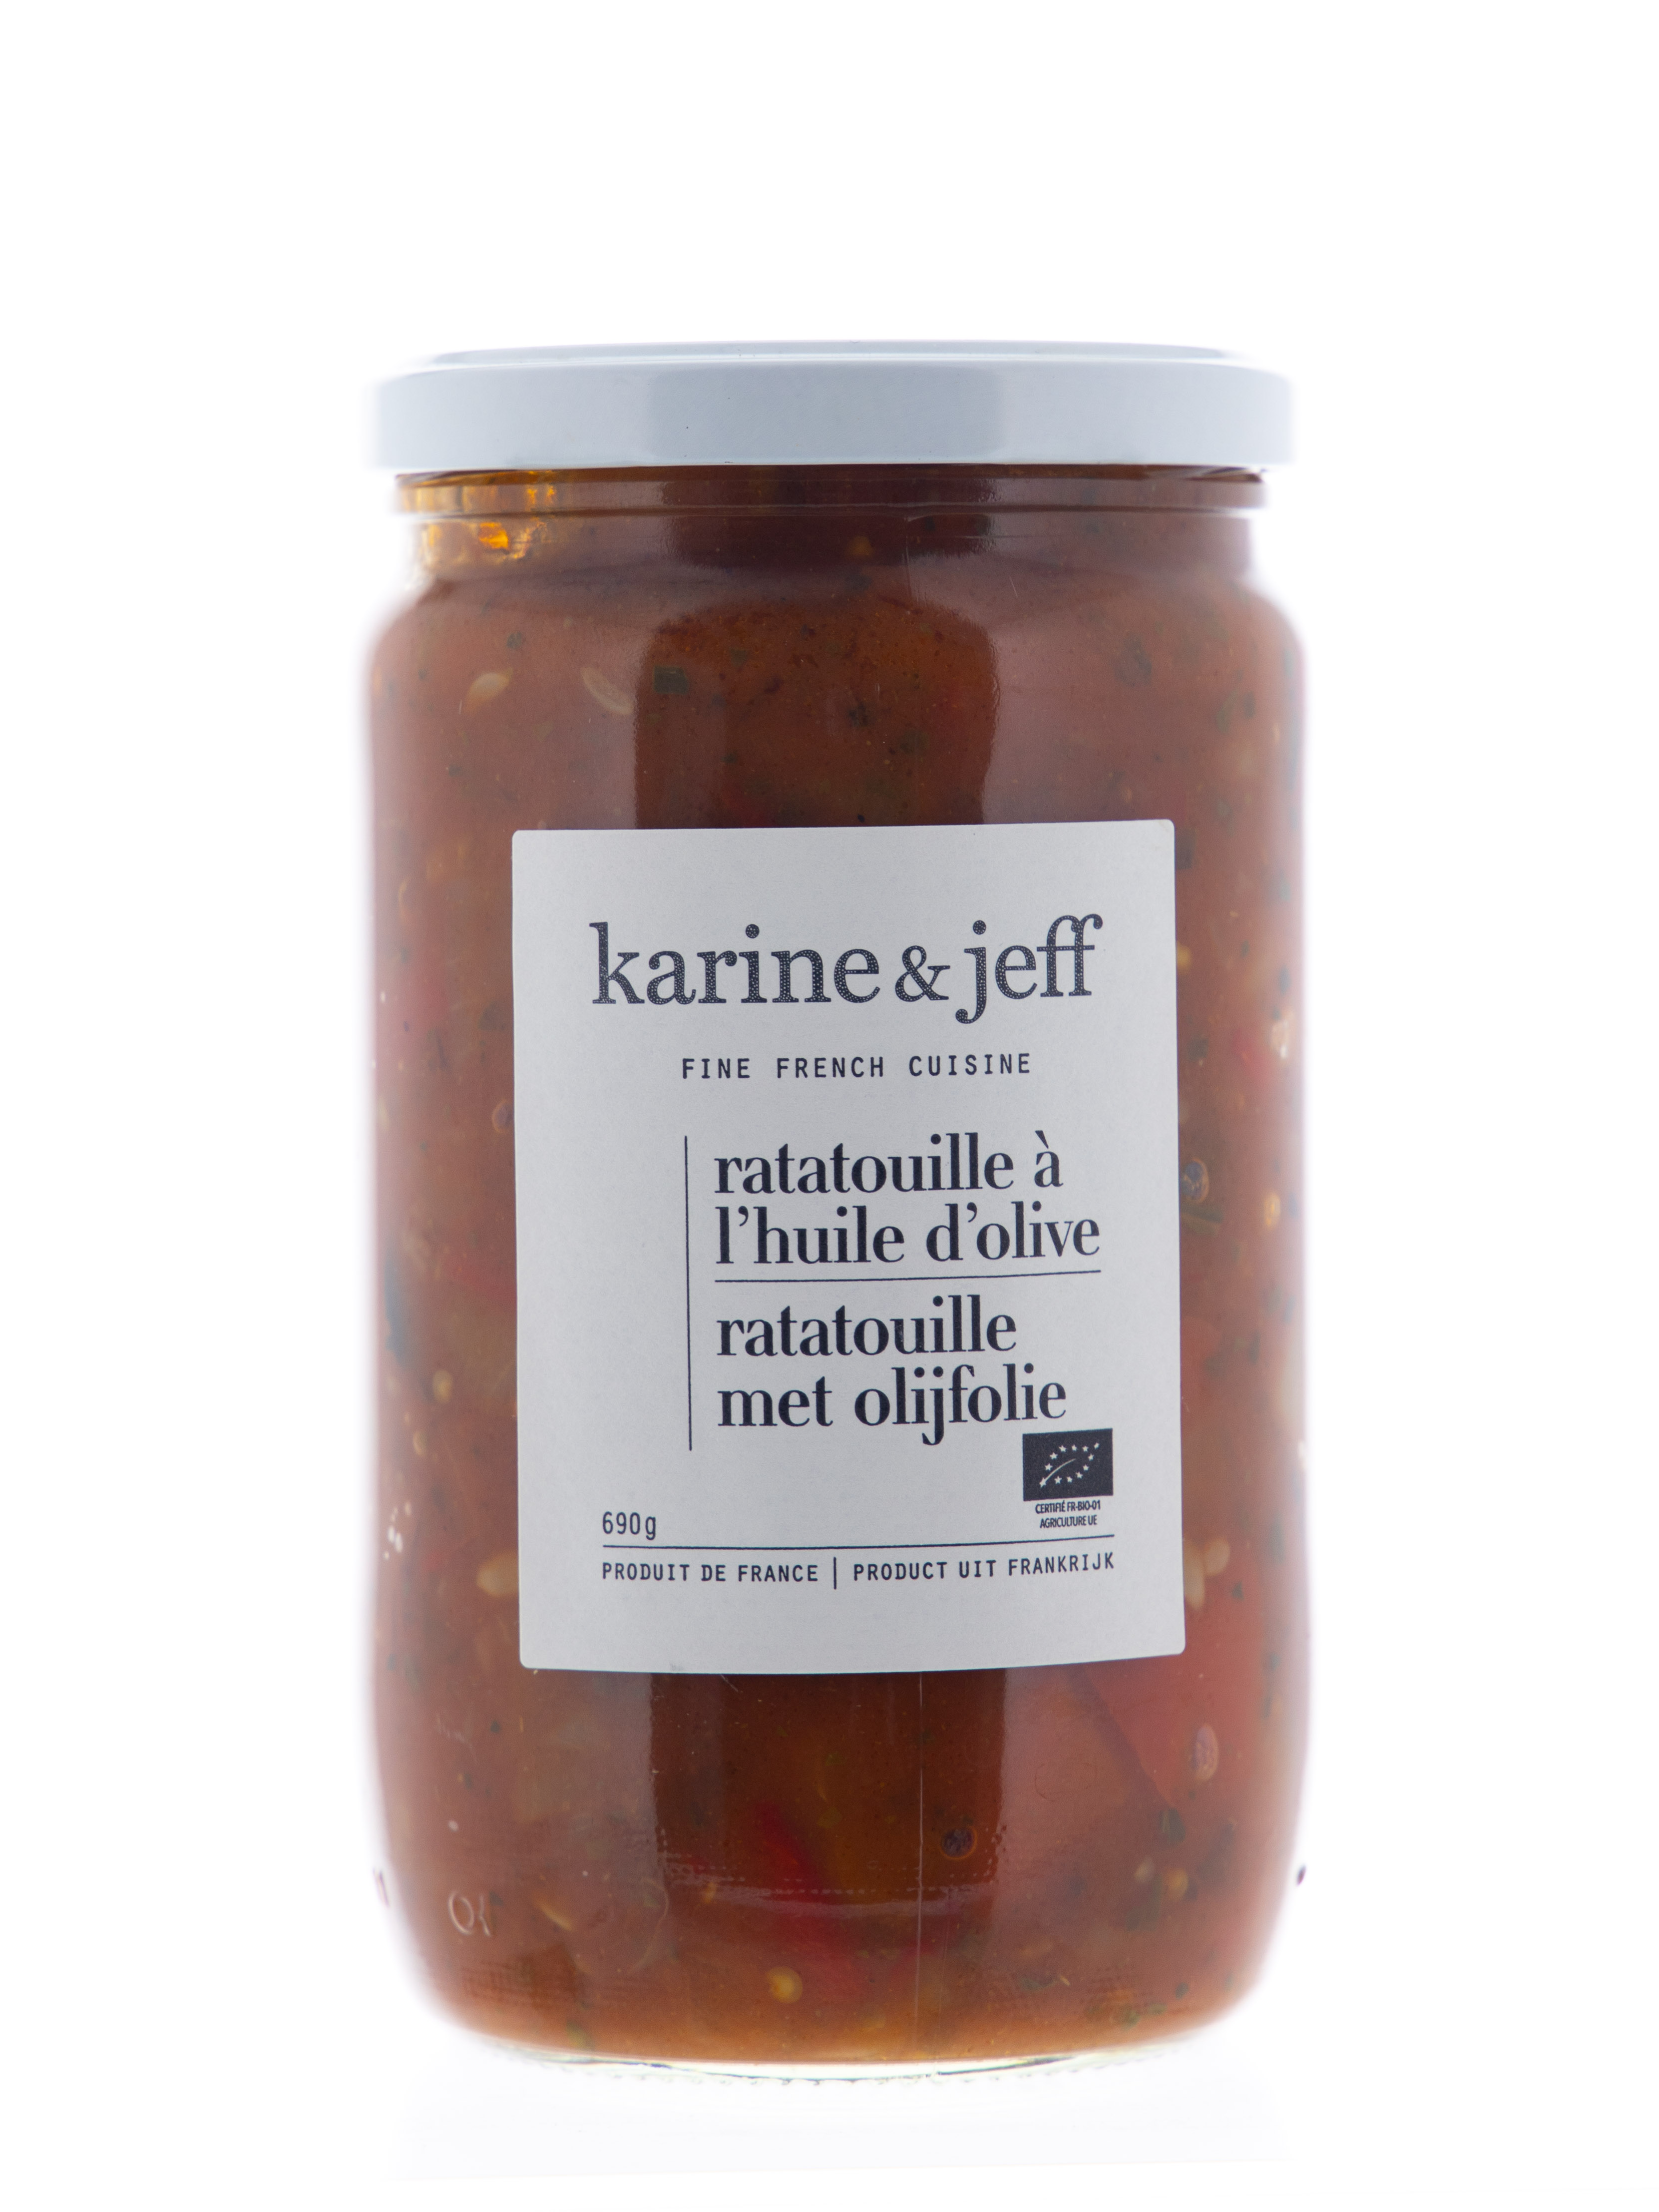 Karine & Jeff Ratatouille met olijfolie bio 660g